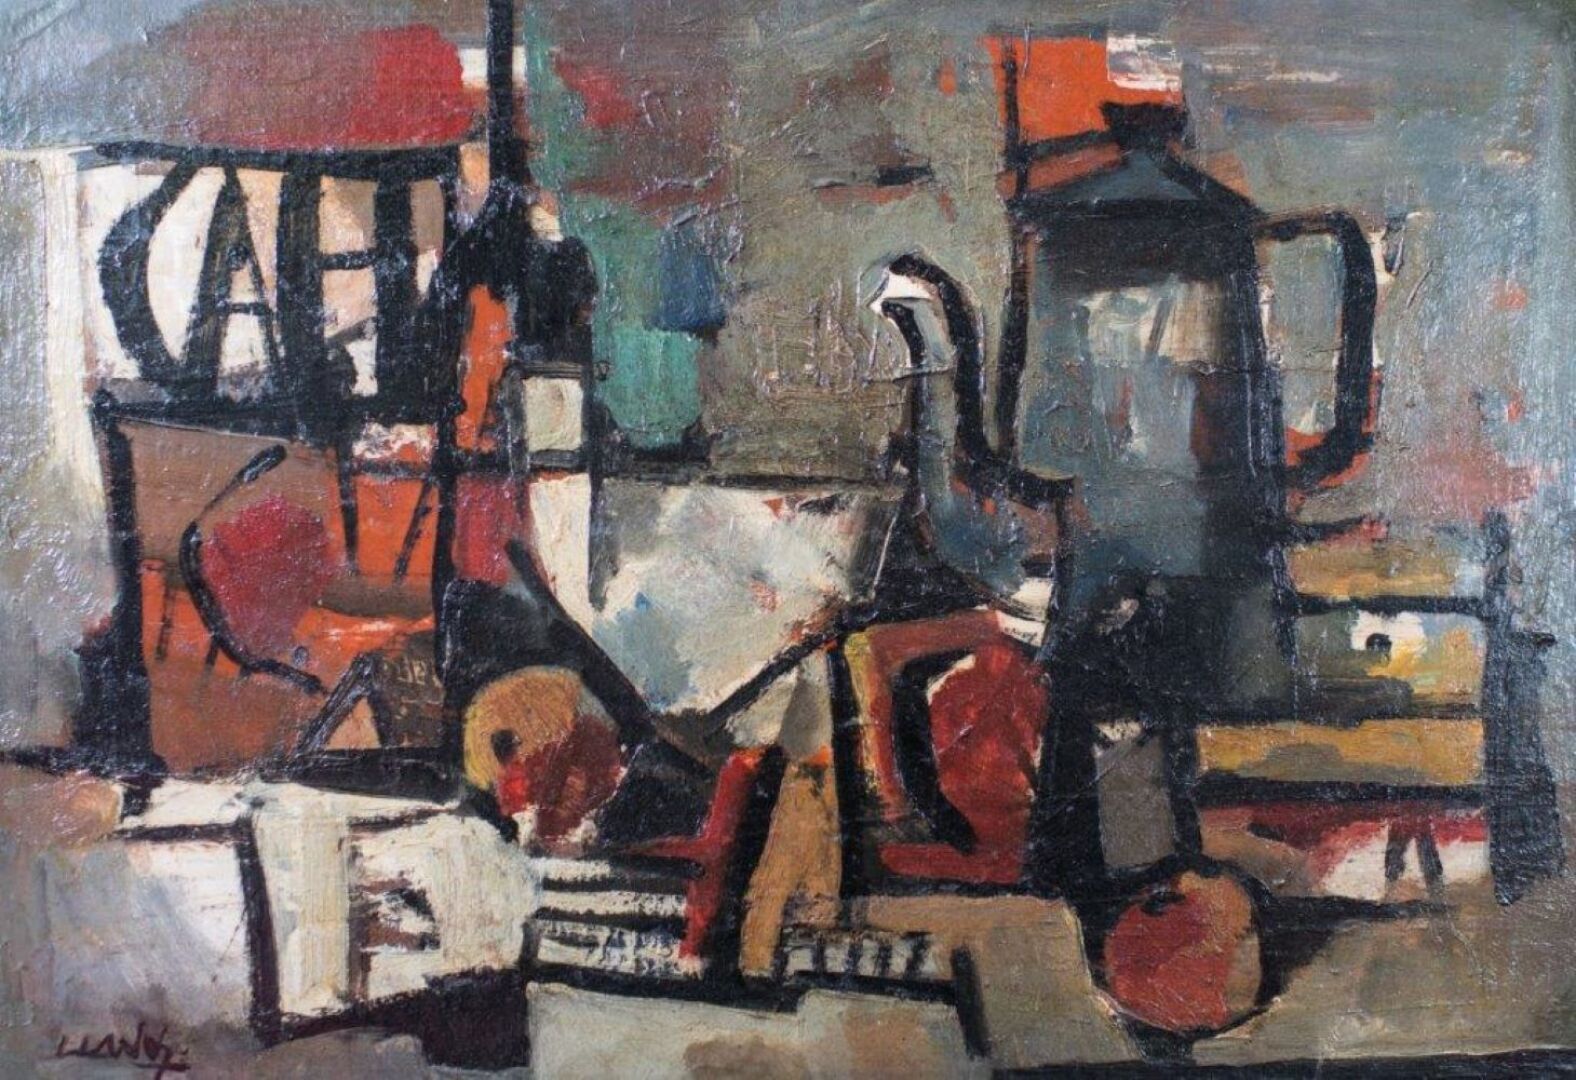 Null 卡洛斯-拉诺斯 (1930-2014)
静物 - 1950
布面油画 
右下方有签名 
34 x 49.5 cm